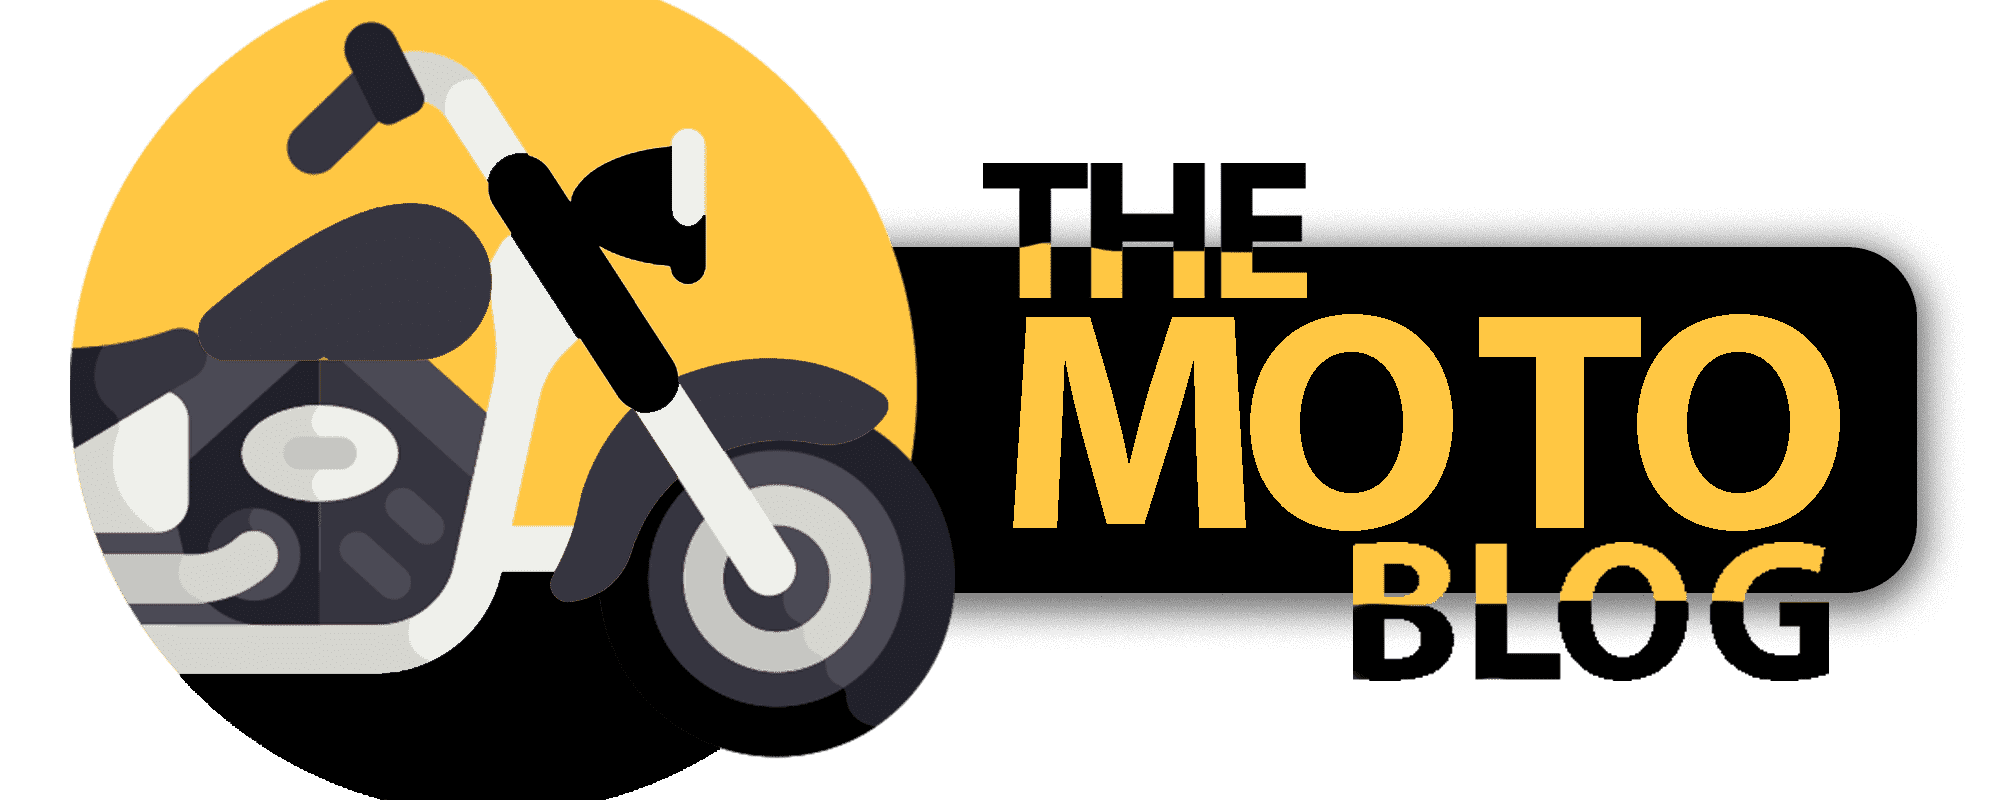 The Moto Blog logo